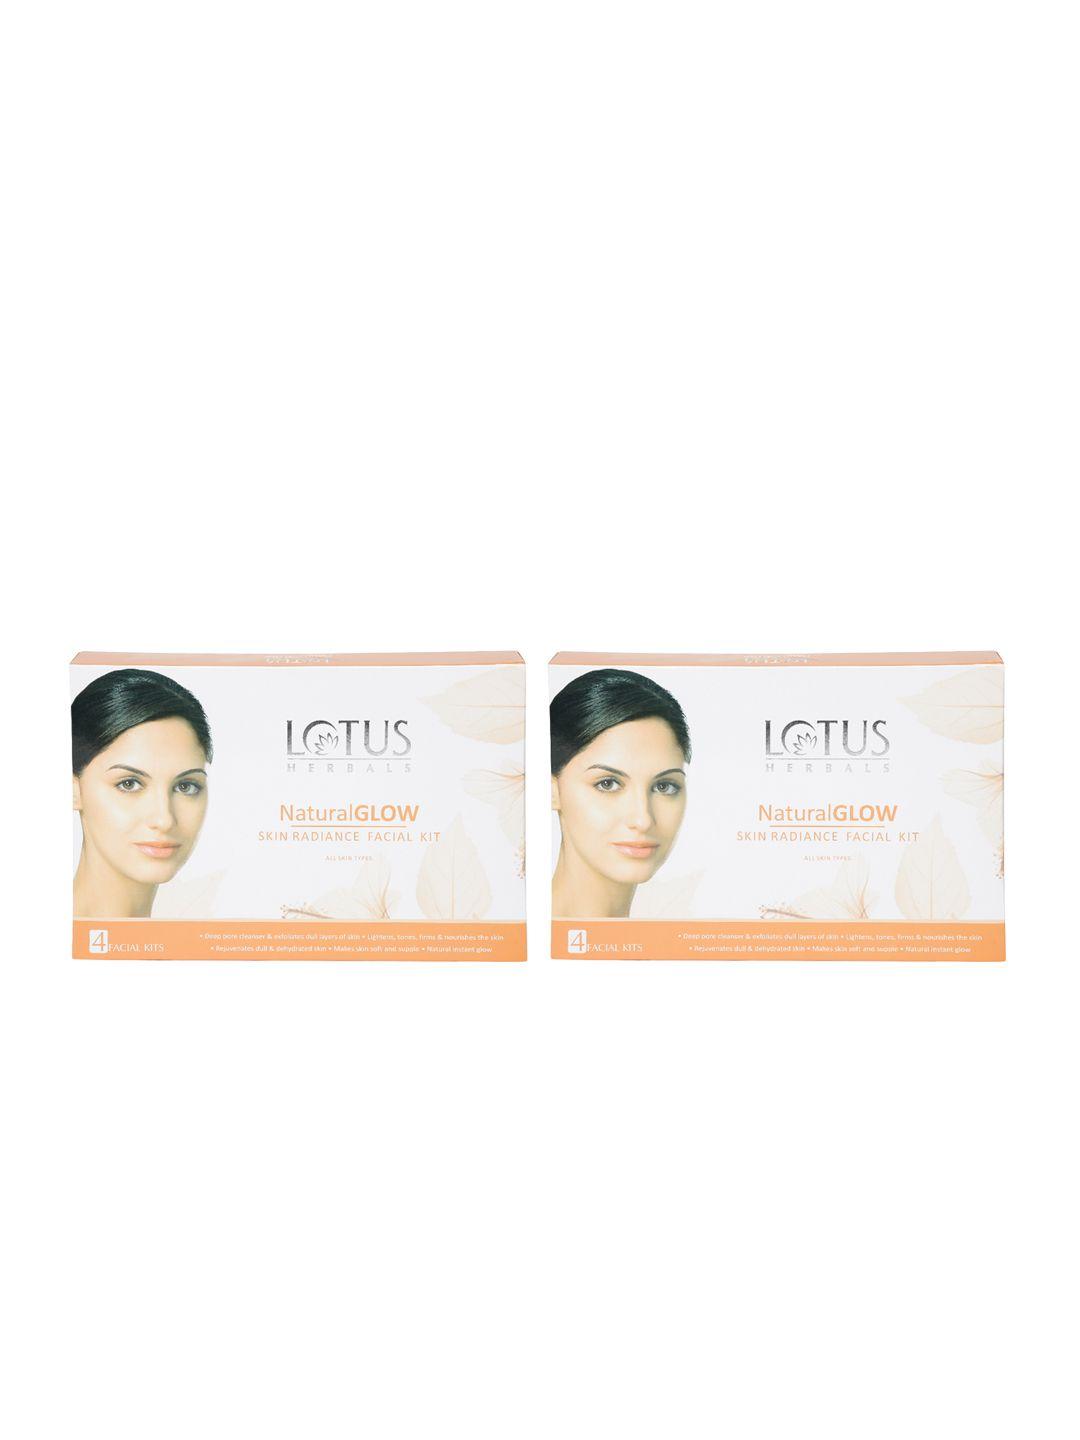 lotus-herbals-set-of-2-naturalglow-skin-radiance-facial-kits---4-kits-each